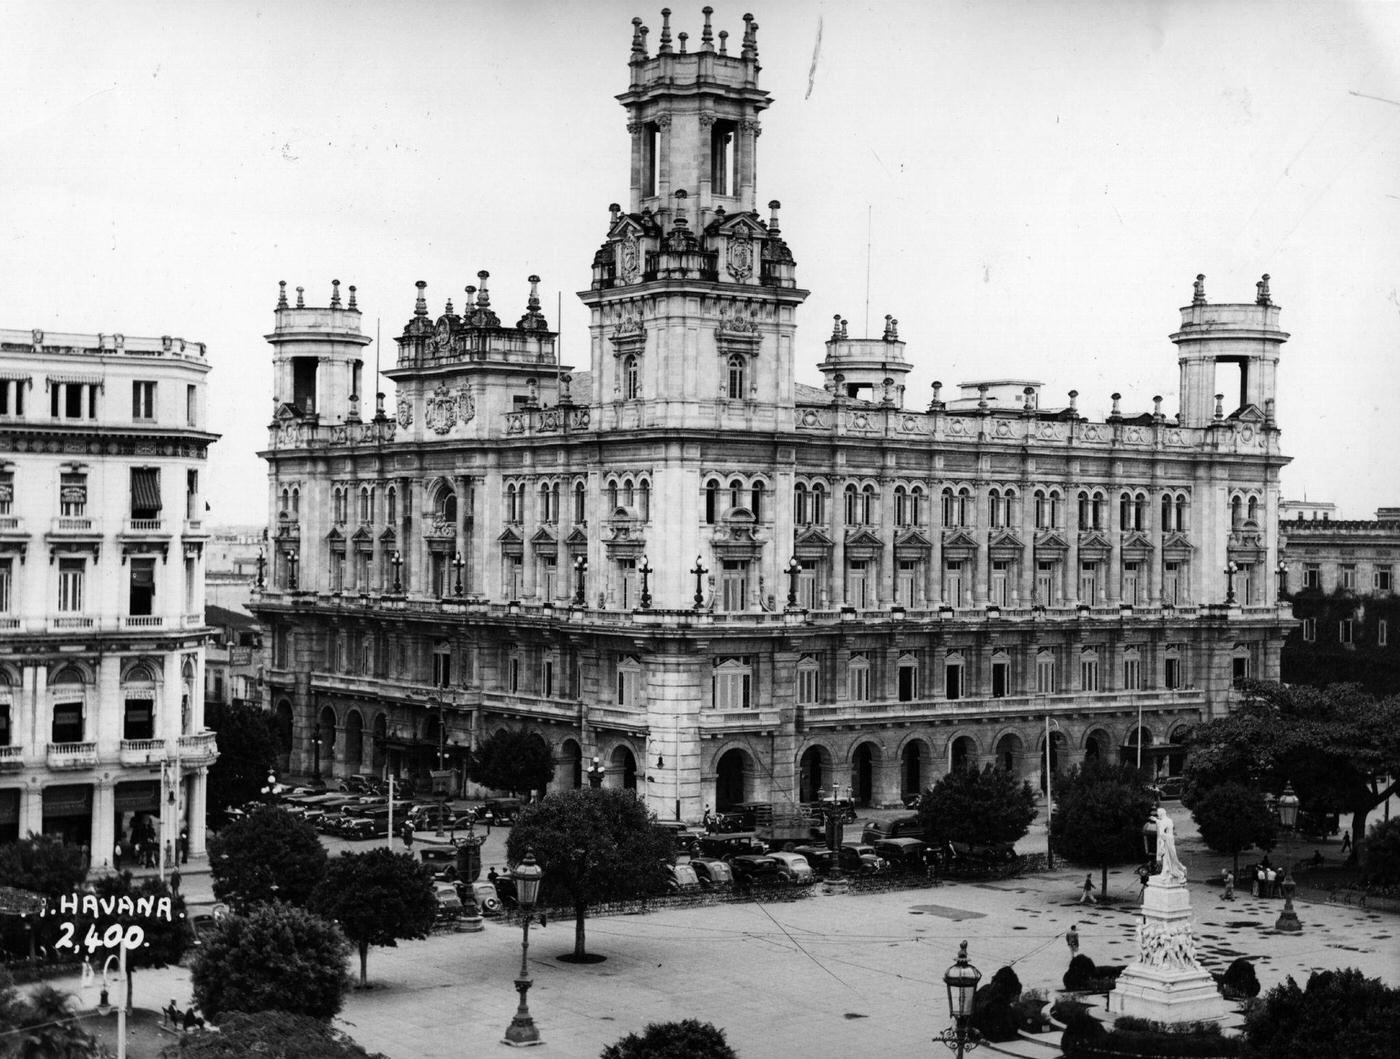 View across a town square in Havana, Cuba, 1935